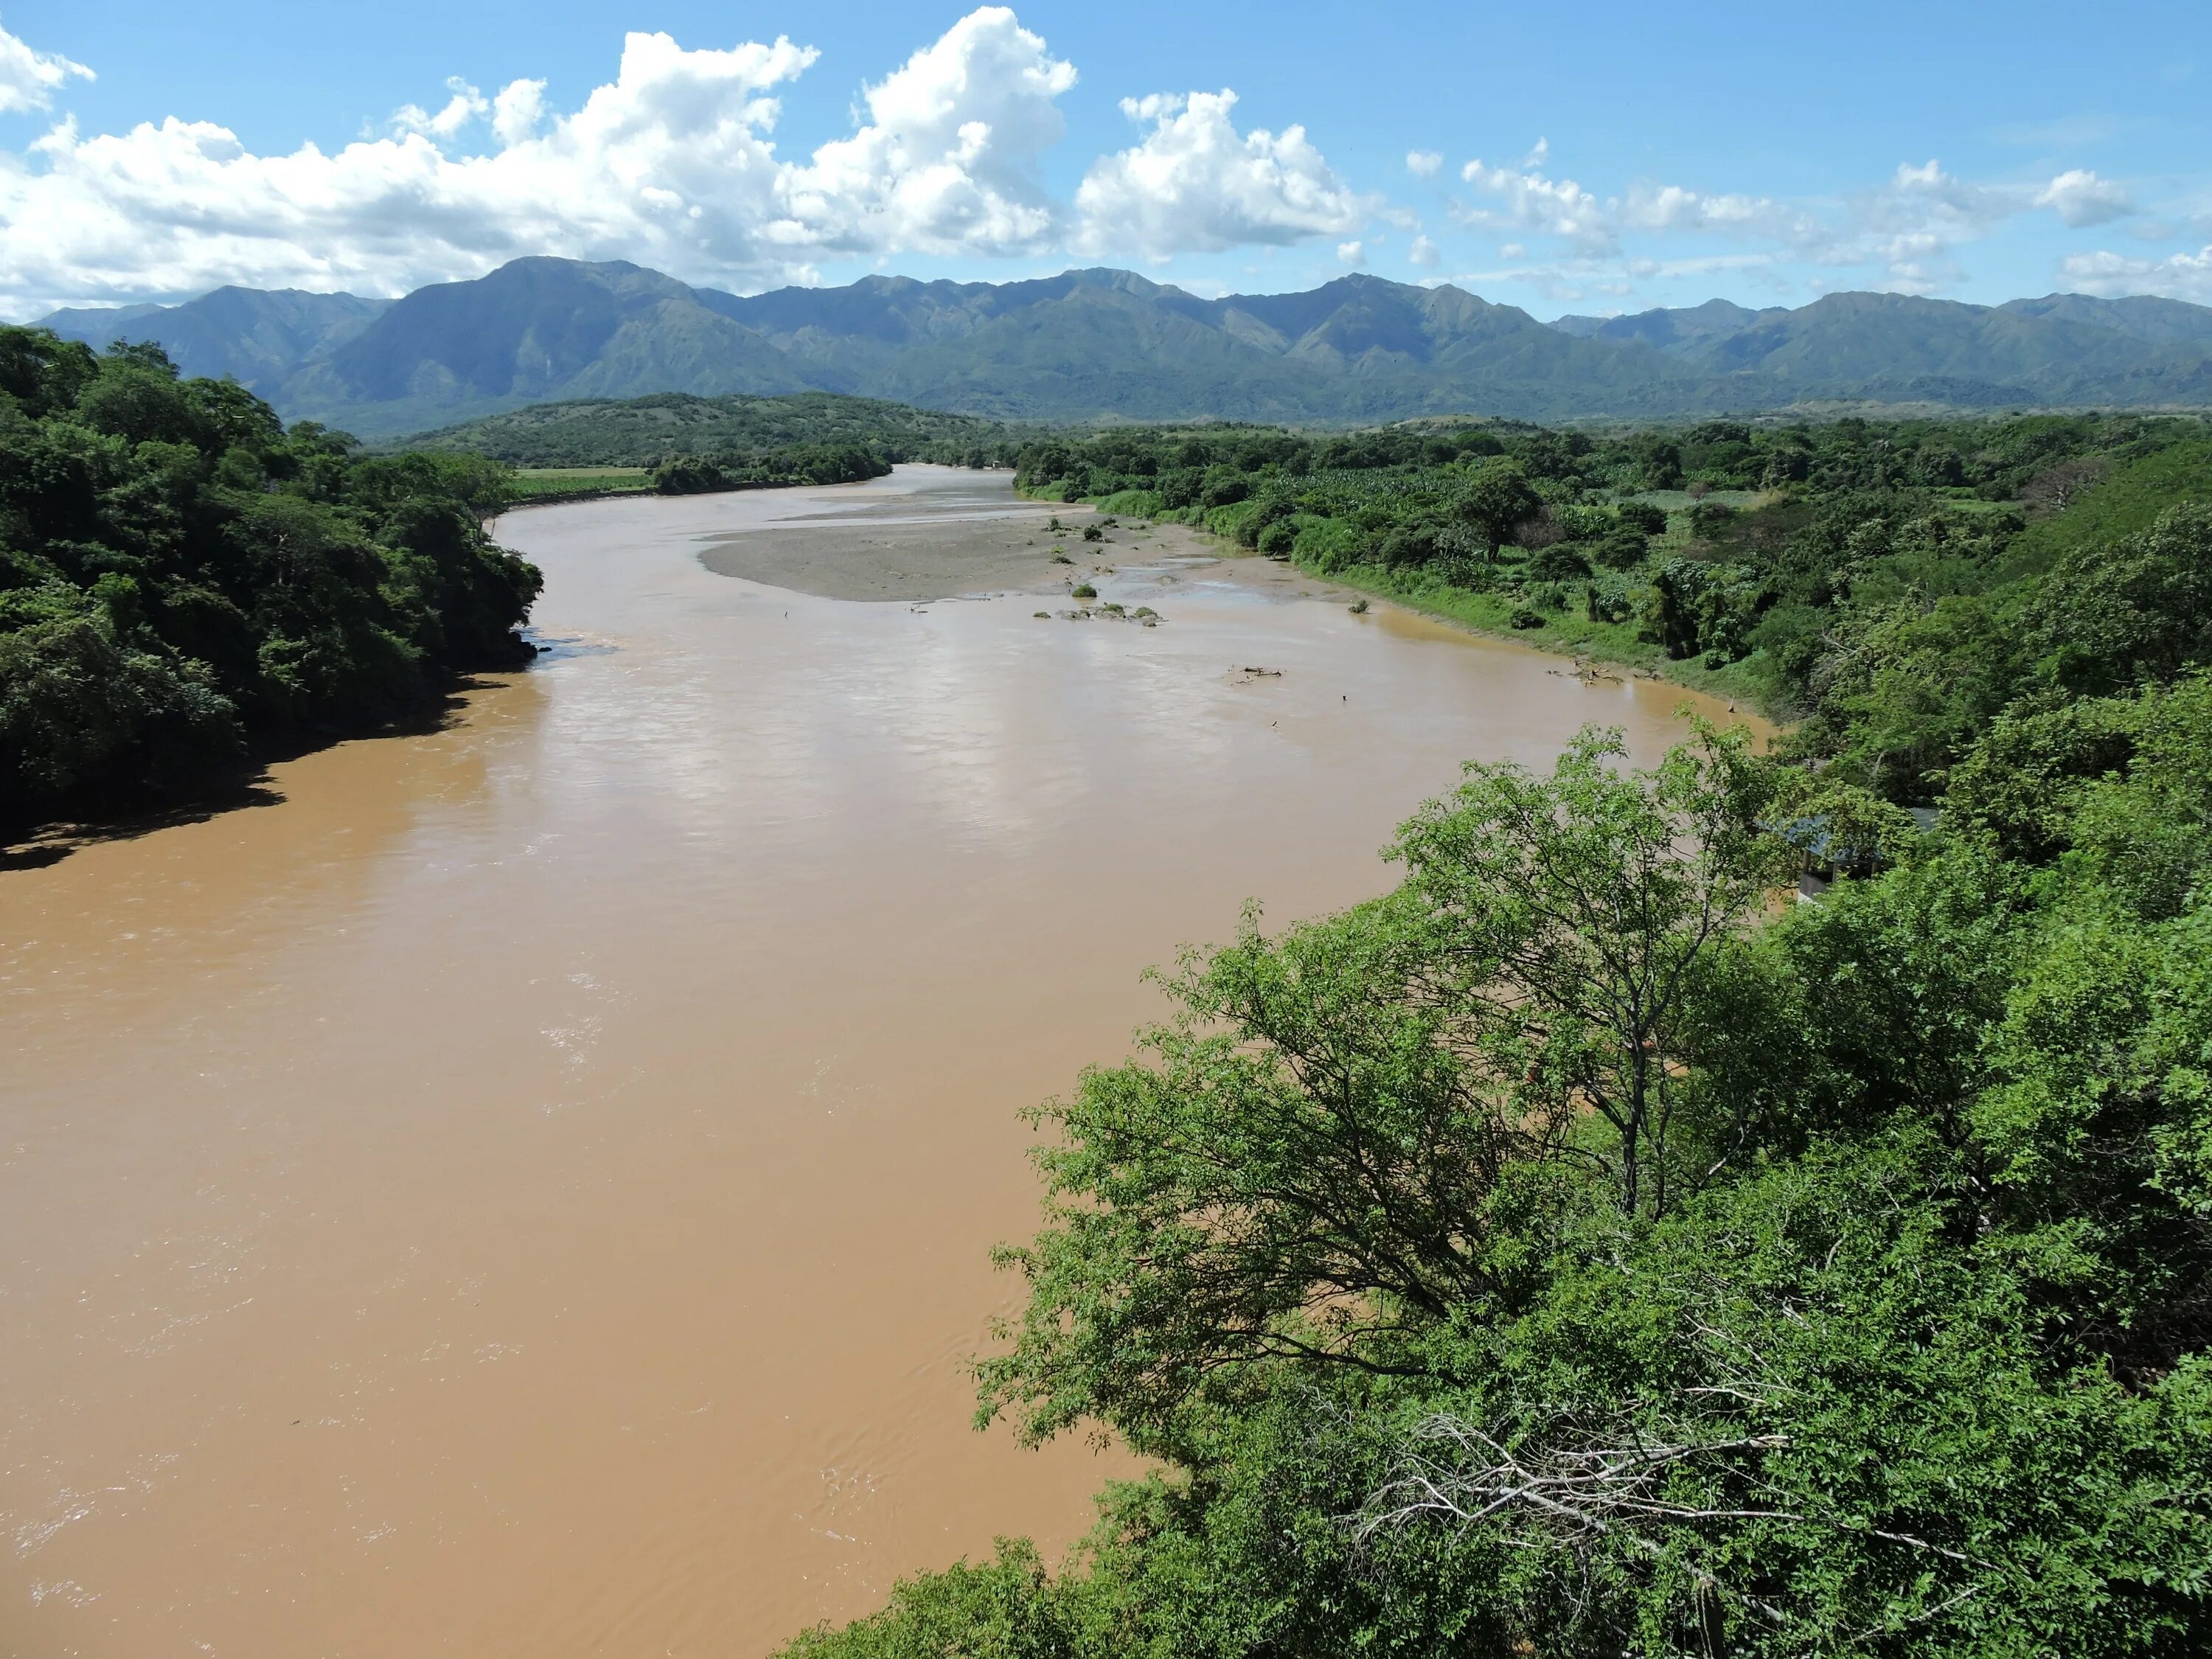 Река магдалена. Река Магдалена в Колумбии. Долина реки Магдалена Колумбия. Магдалена (река) реки Колумбии. Магдалена река в Южной Америке.